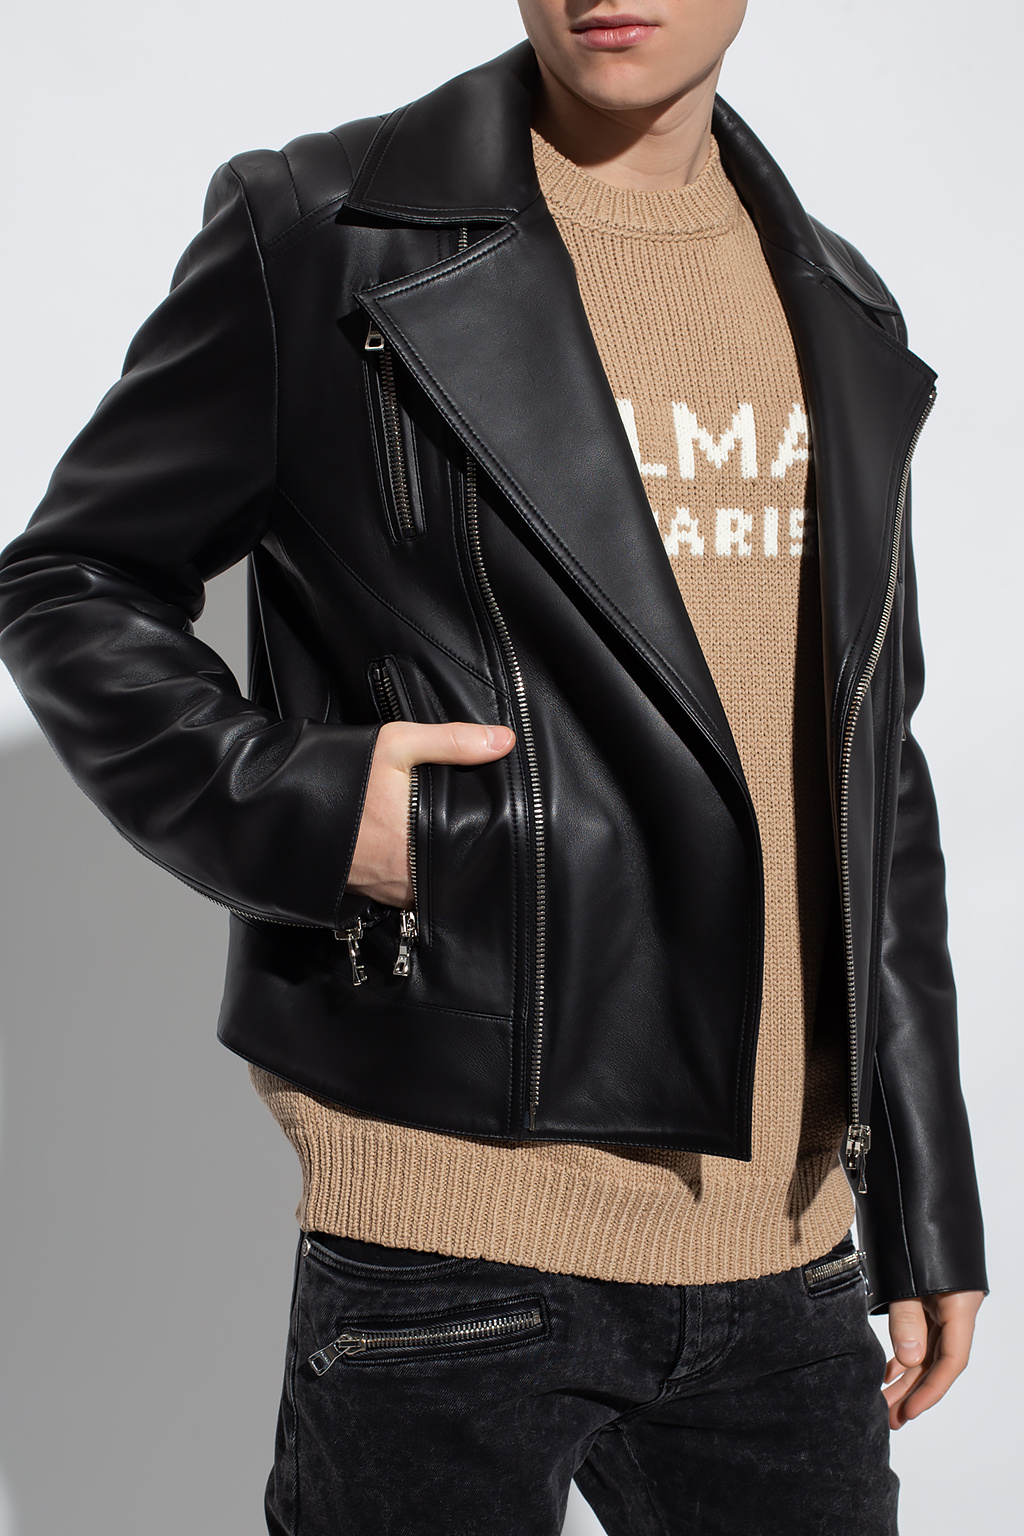 Shipley Mount Vesuv Udelade Balmain Leather jacket | Men's Clothing | Vitkac